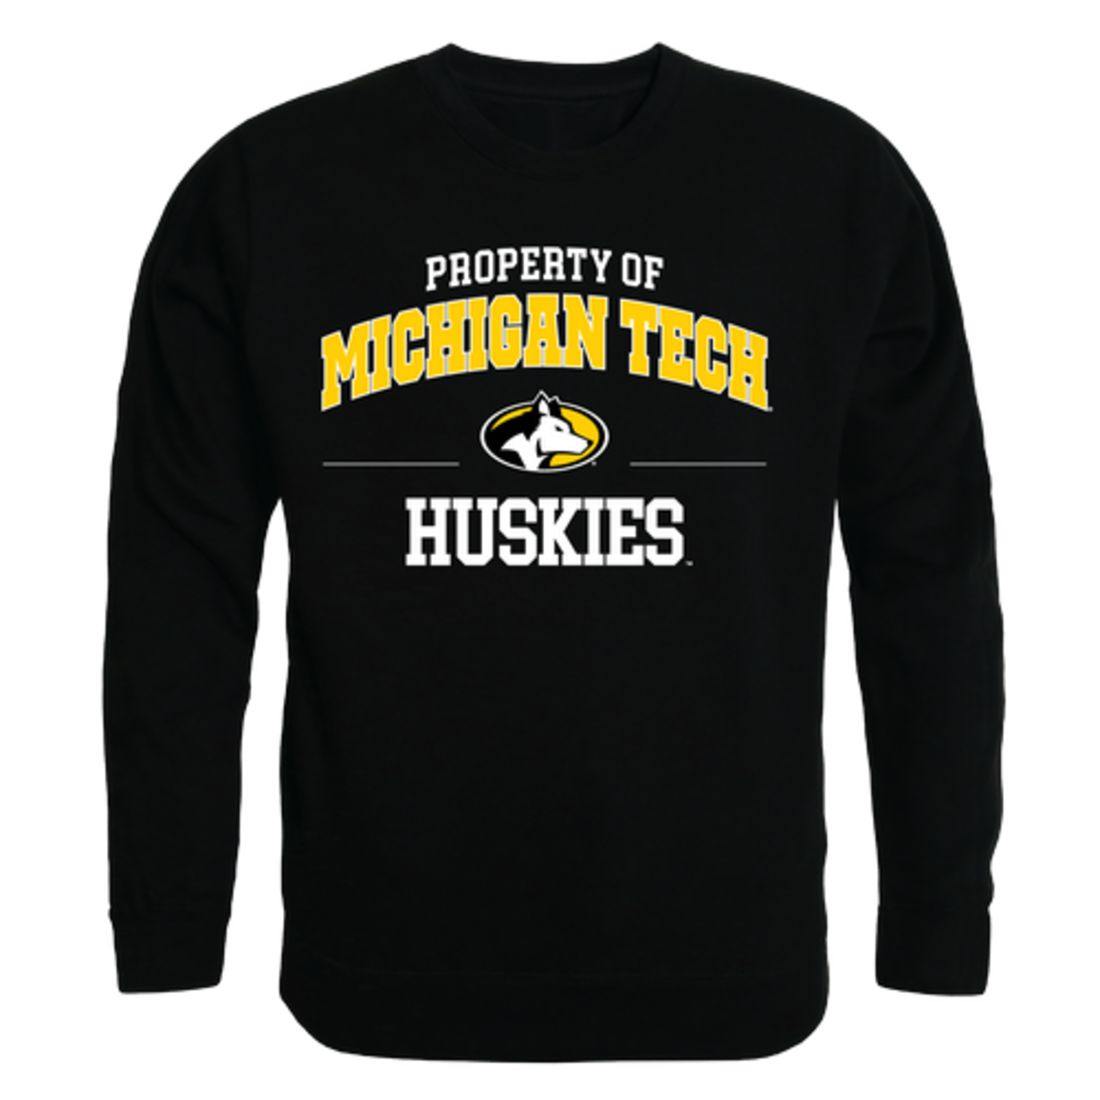 Michigan Technological University Huskies Property Crewneck Pullover Sweatshirt Sweater Black-Campus-Wardrobe